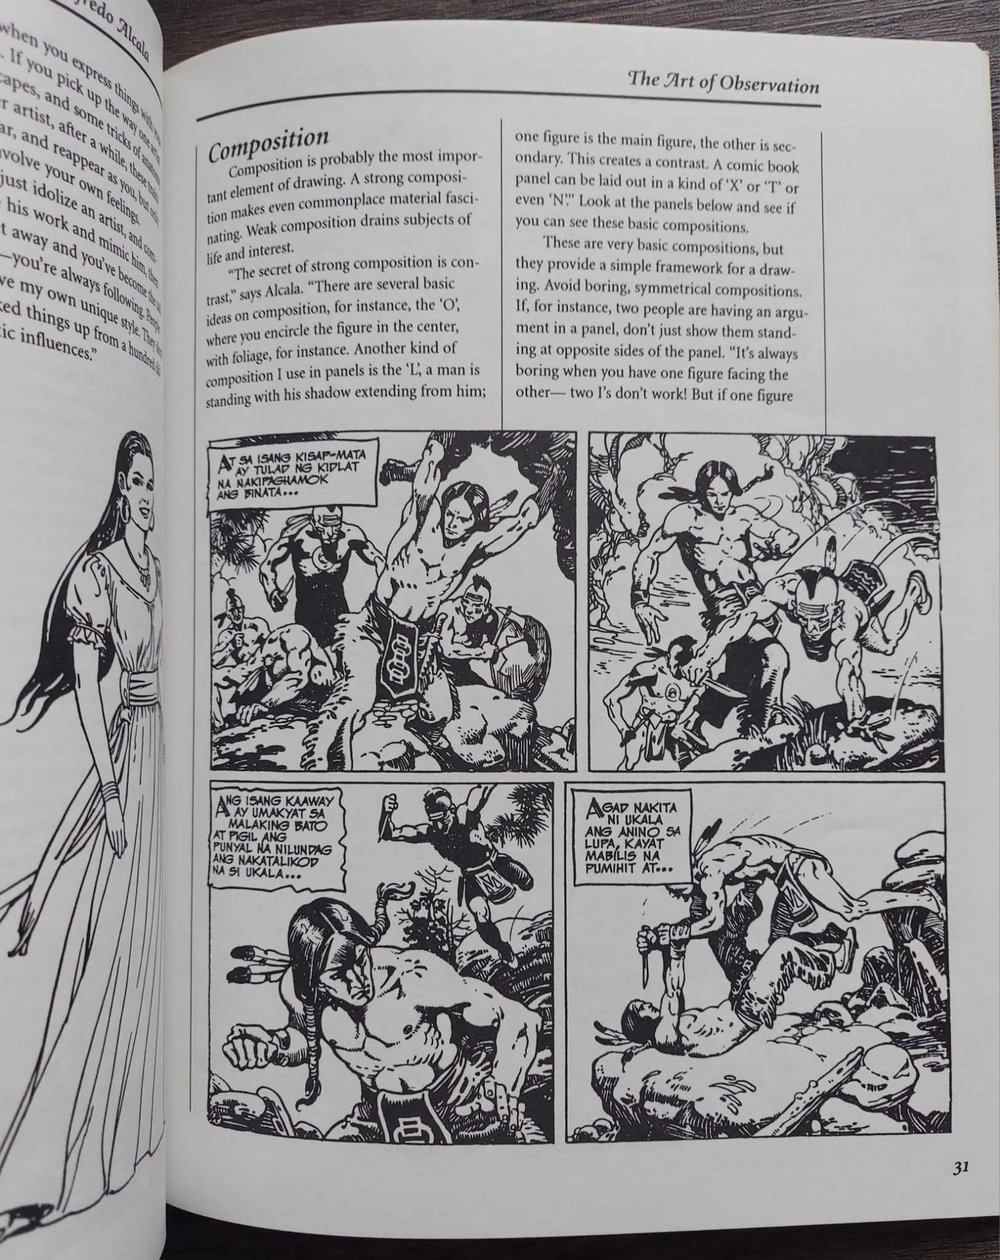 Secret Teachings of a Comic Book Master: The Art of Alfredo Alcala, by Heidi MacDonald